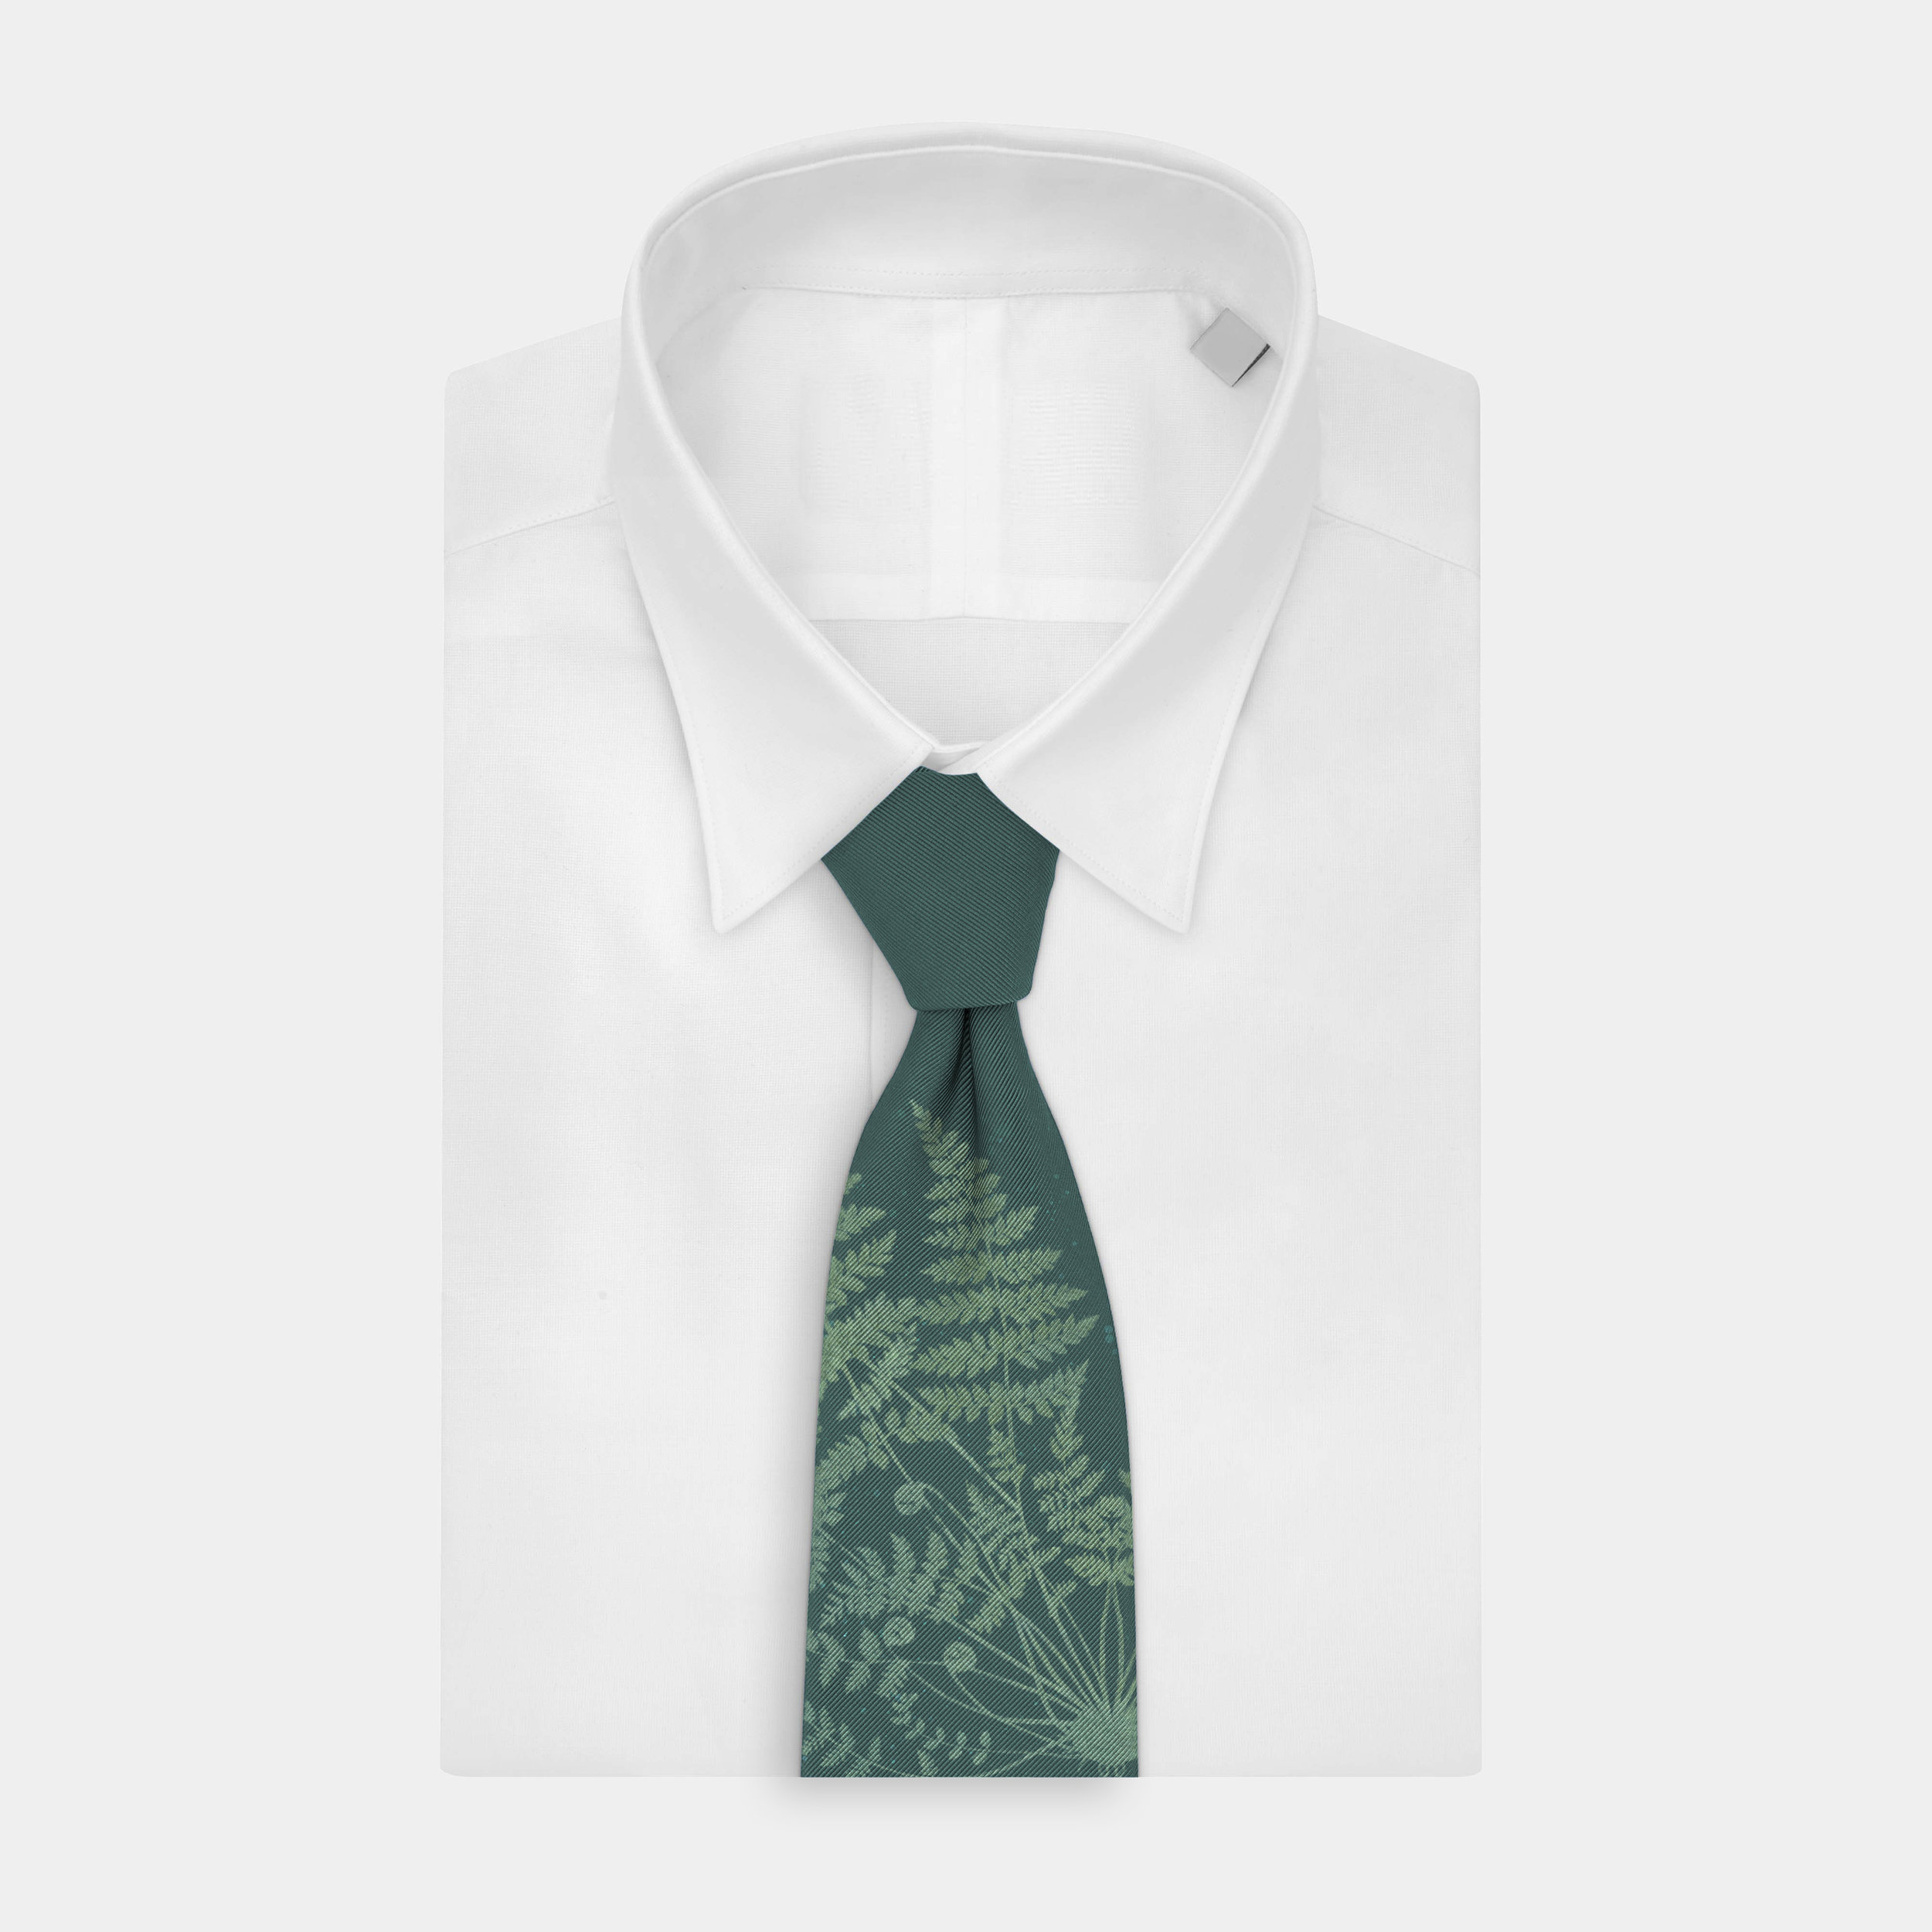 Enfern Tie&Shirt.jpg